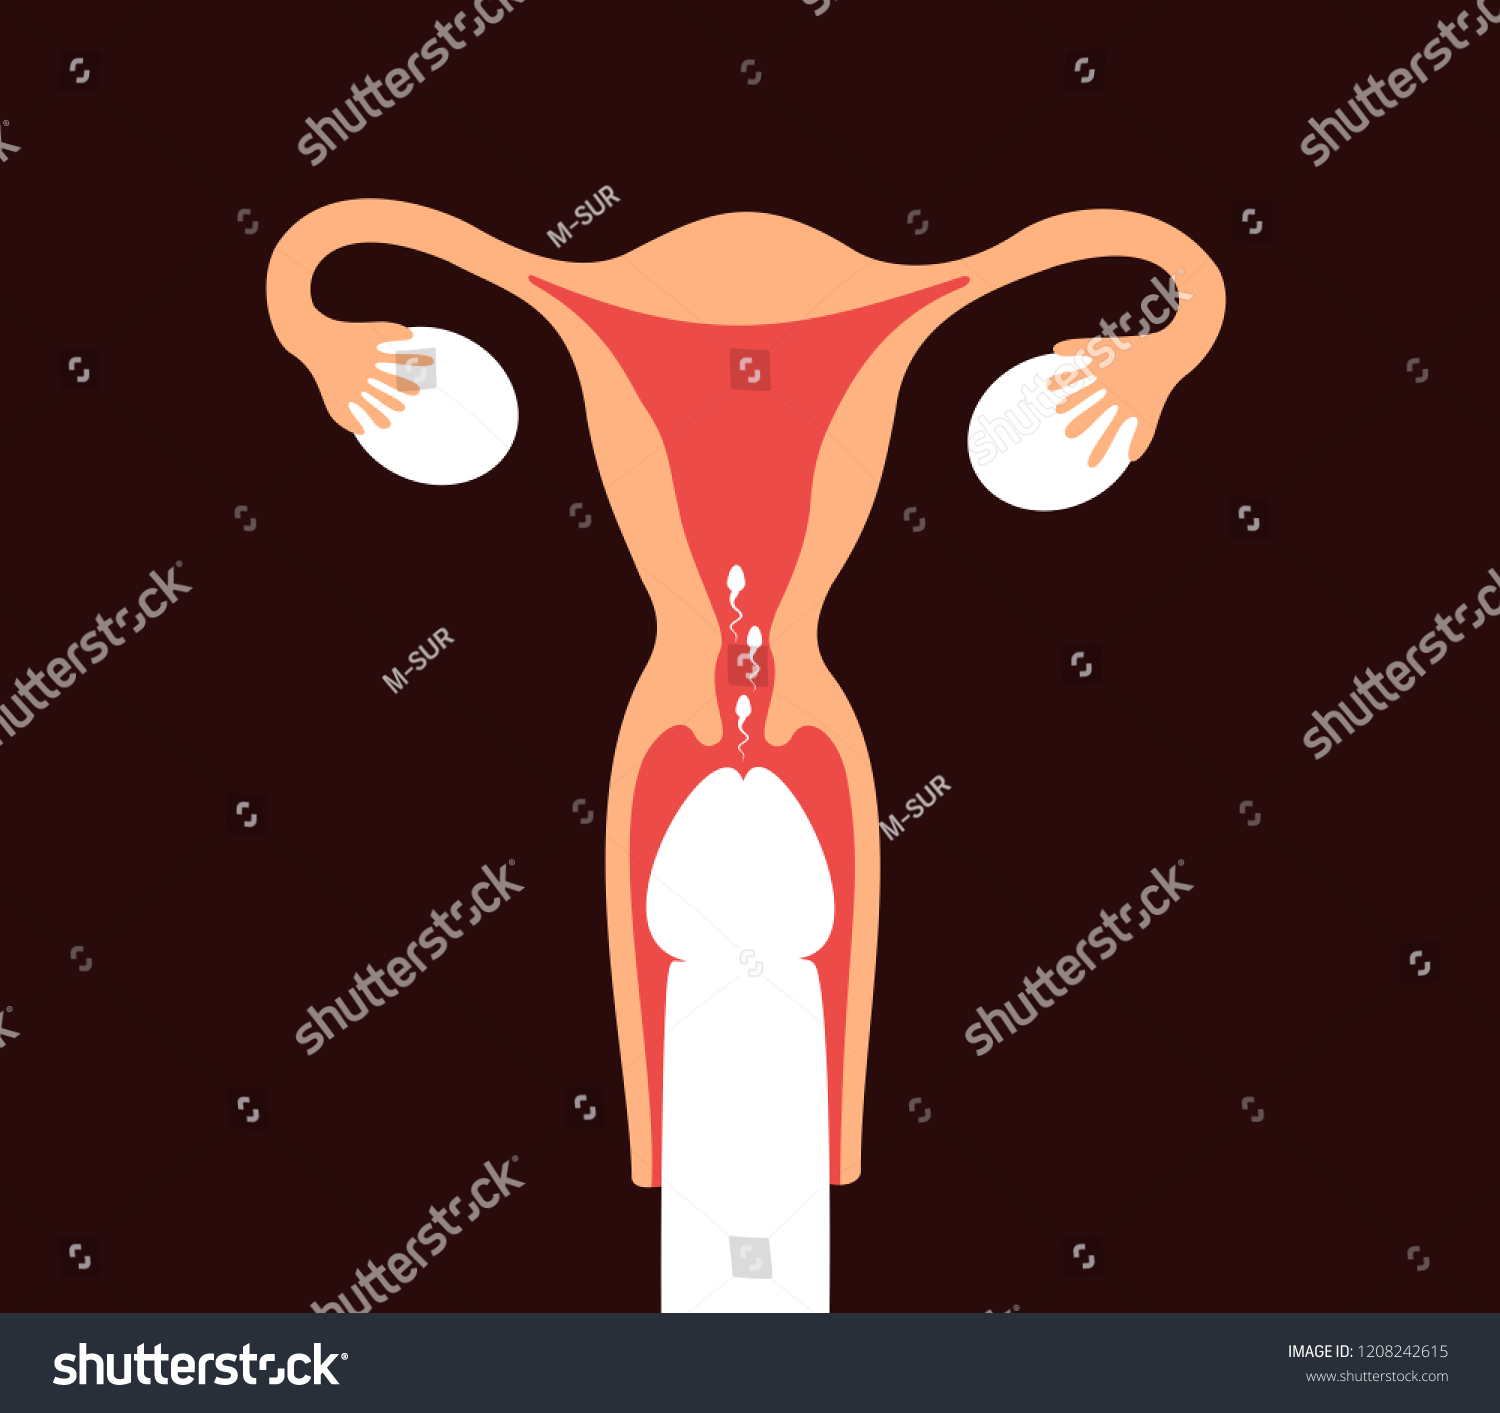 Vagina Penetration